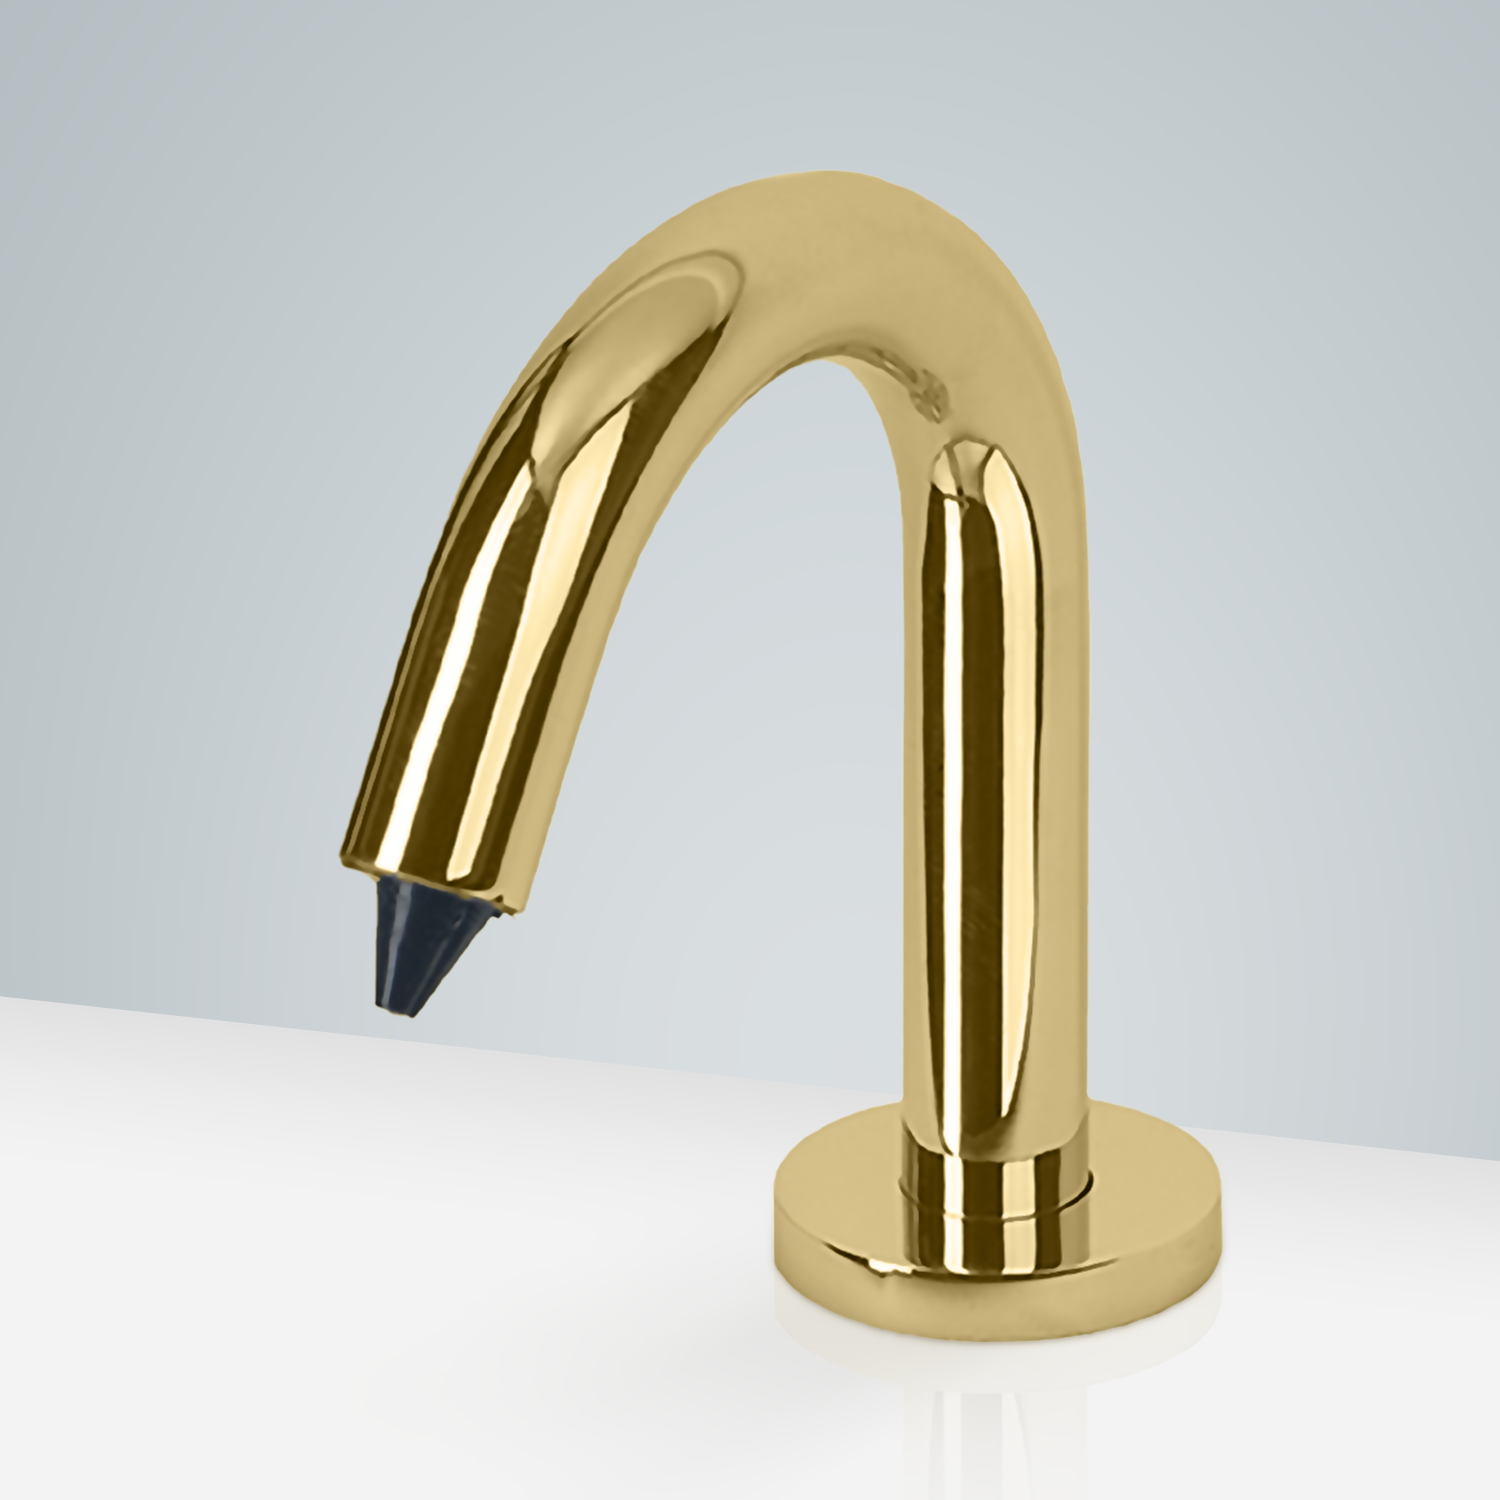 Fontana Dijon Sensor Deck Mount Commercial Soap Dispenser In Polished Brass Finish